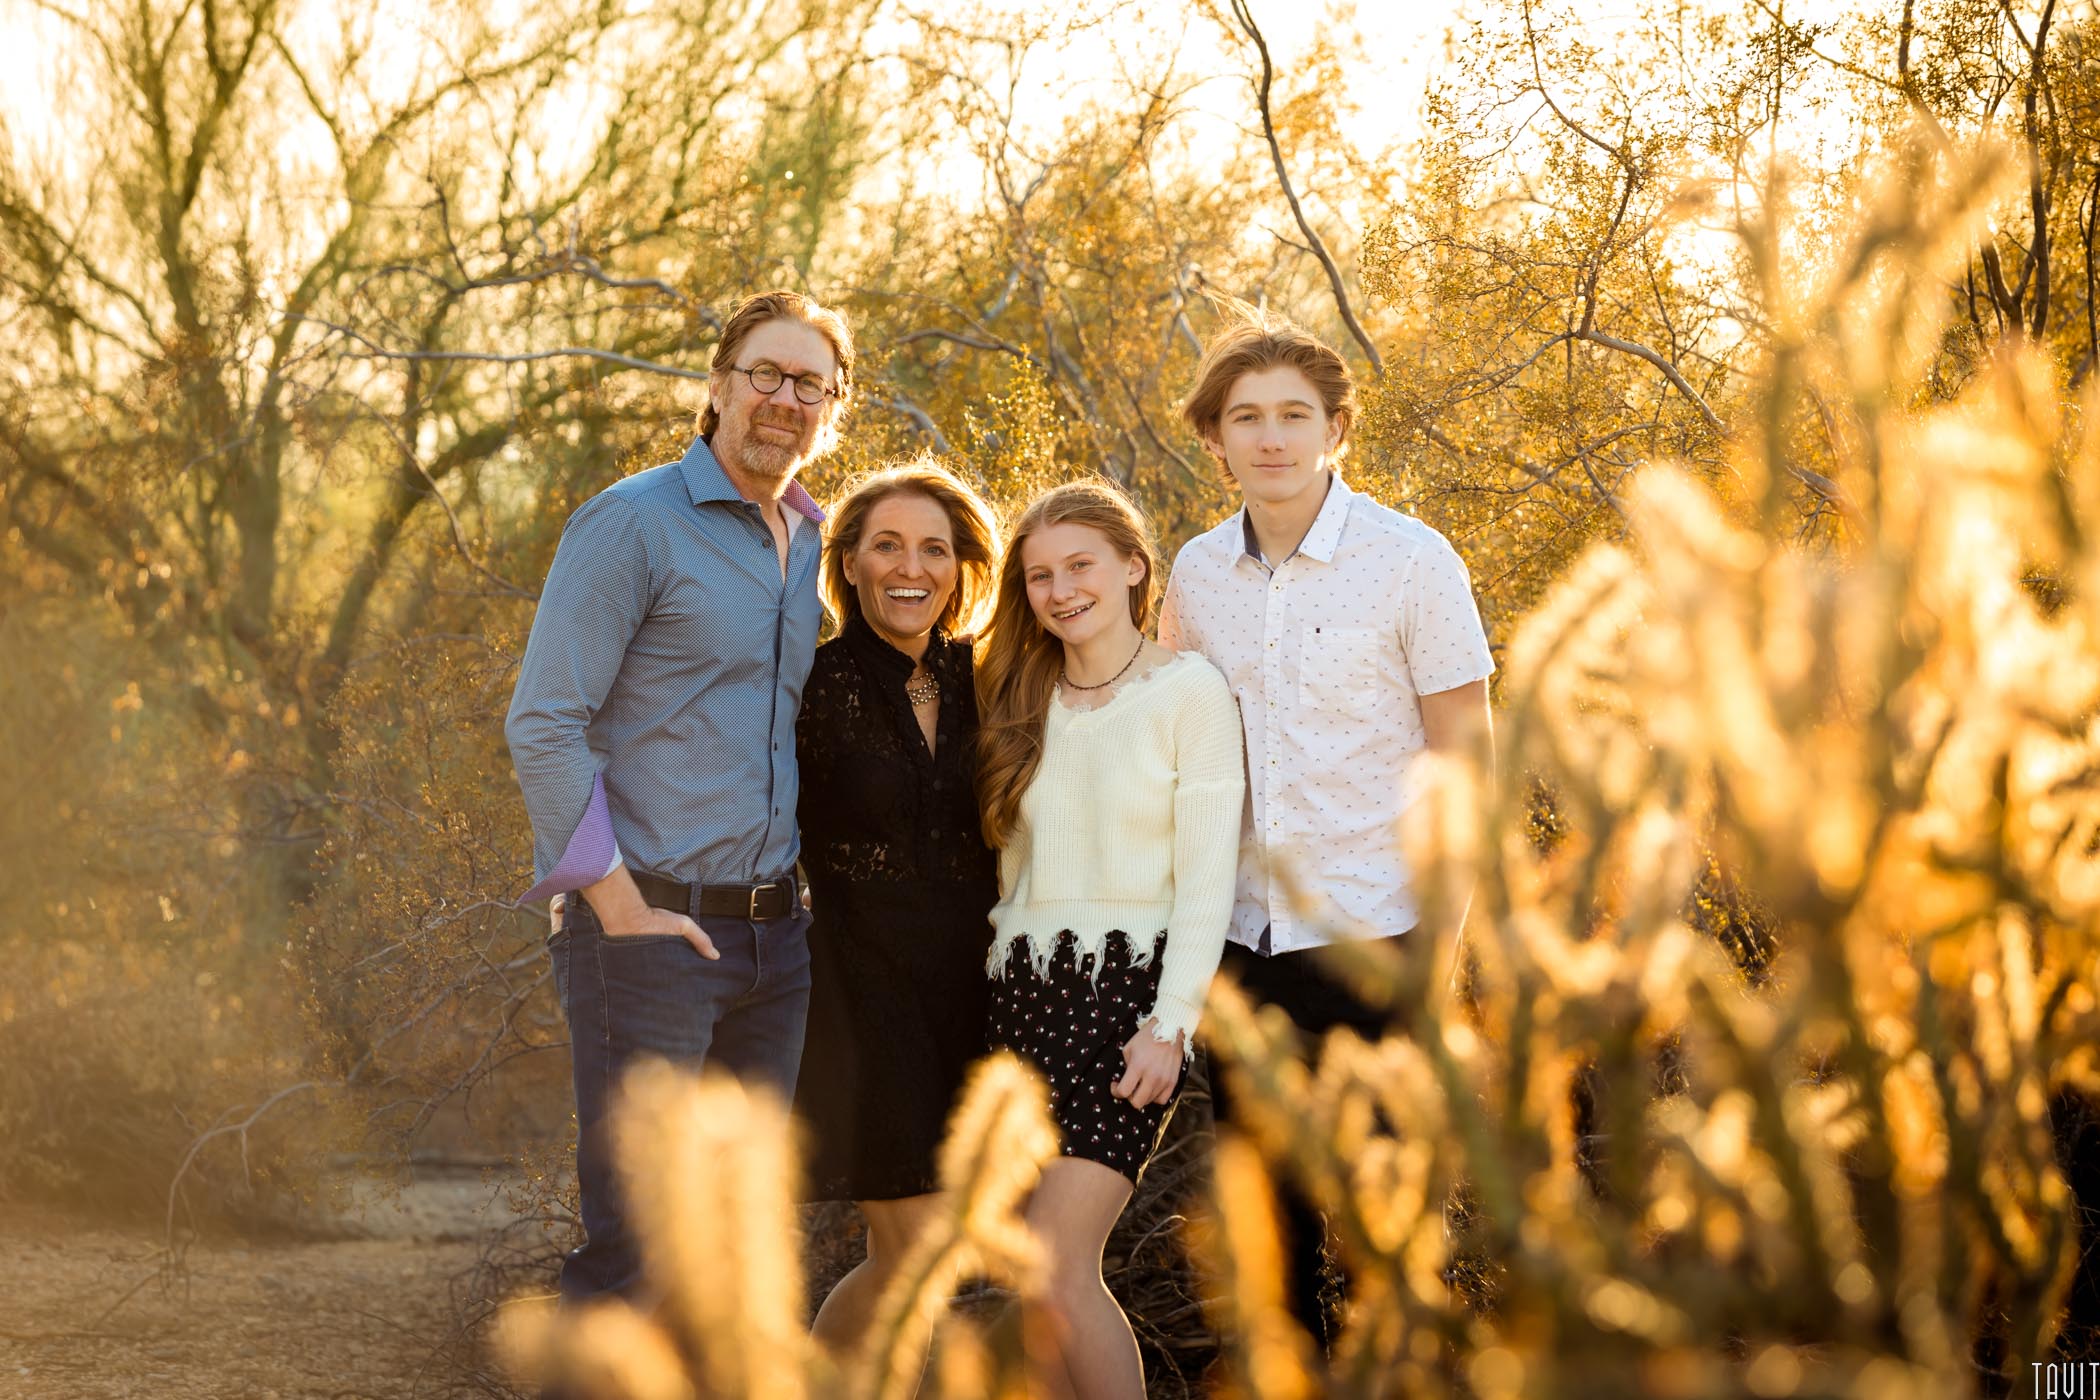 Artistic family photo in Arizona desert